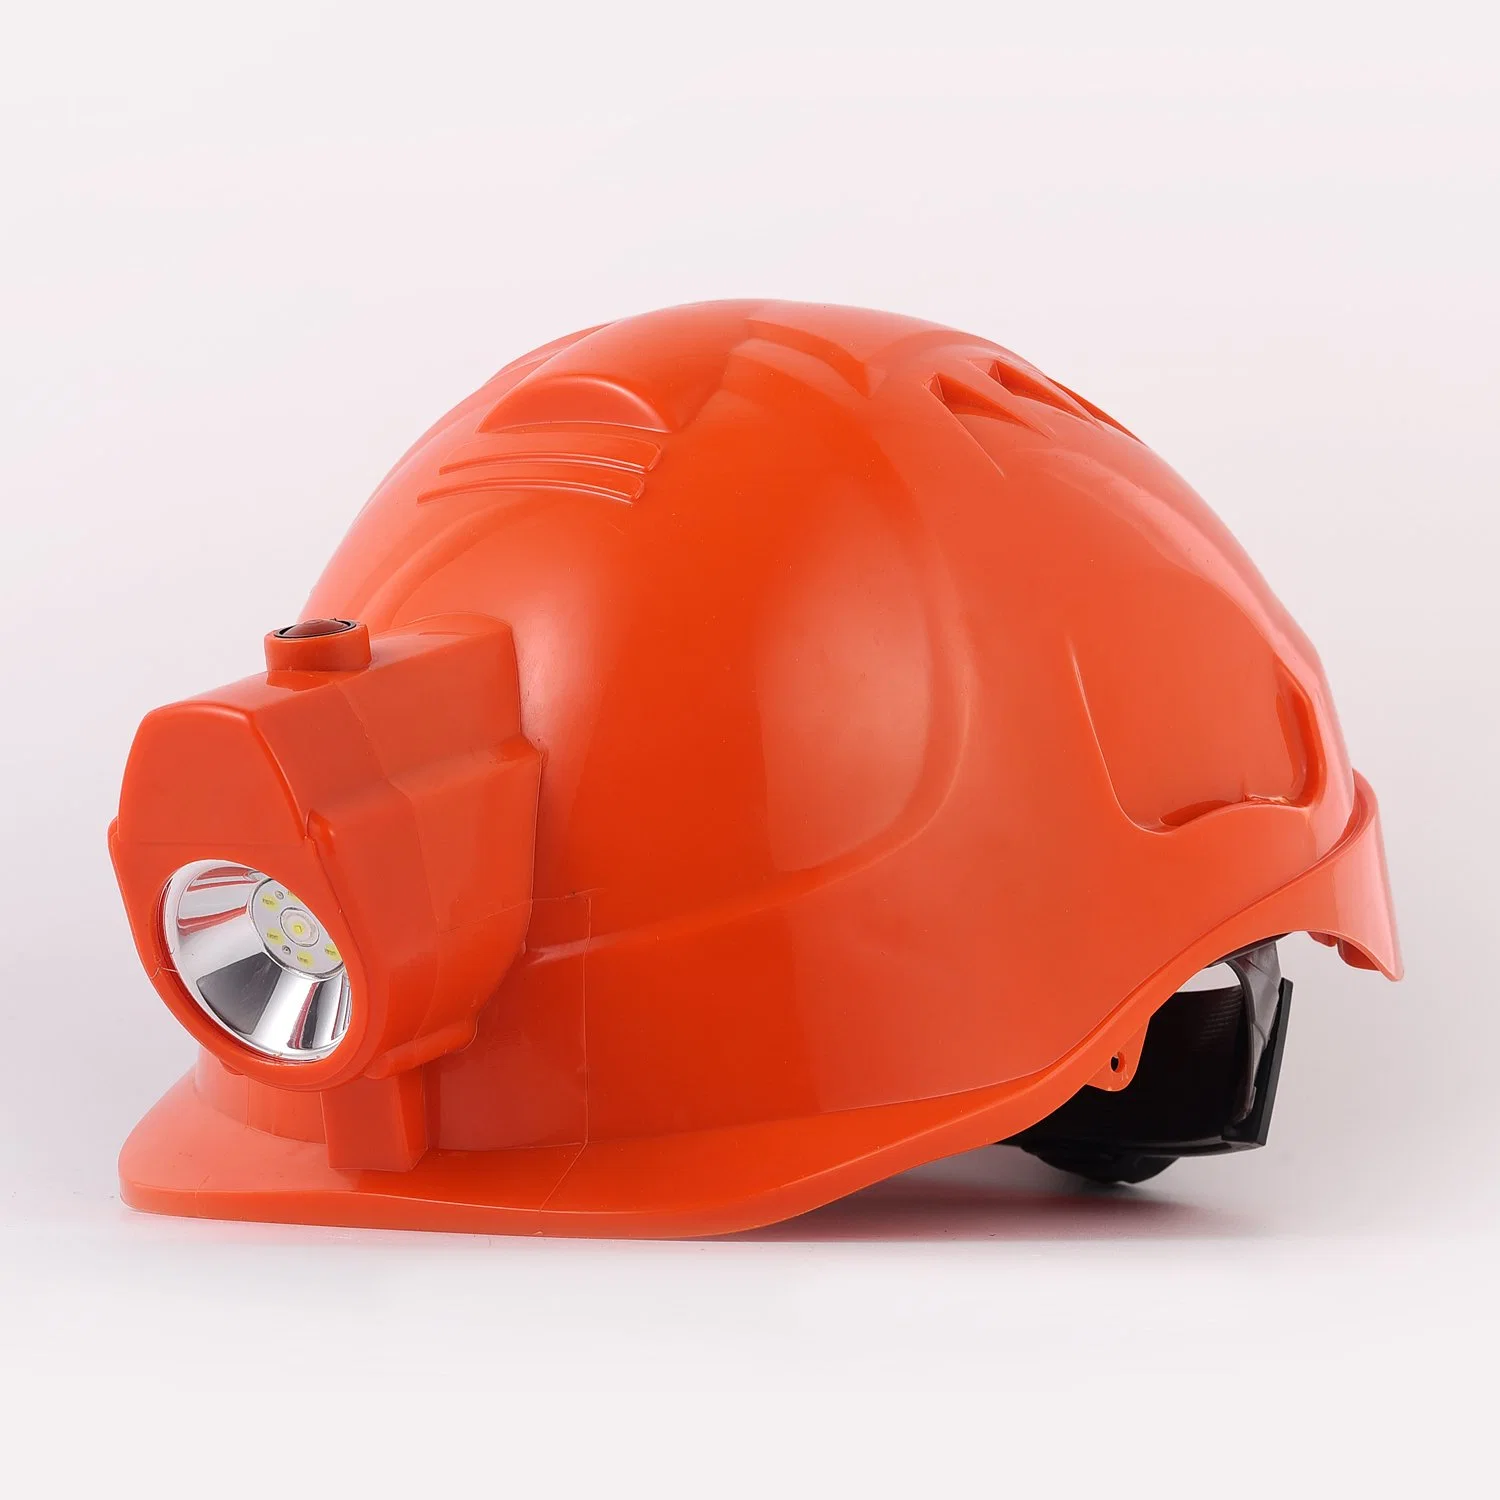 Industrial Headwear Protection Safety Helmet